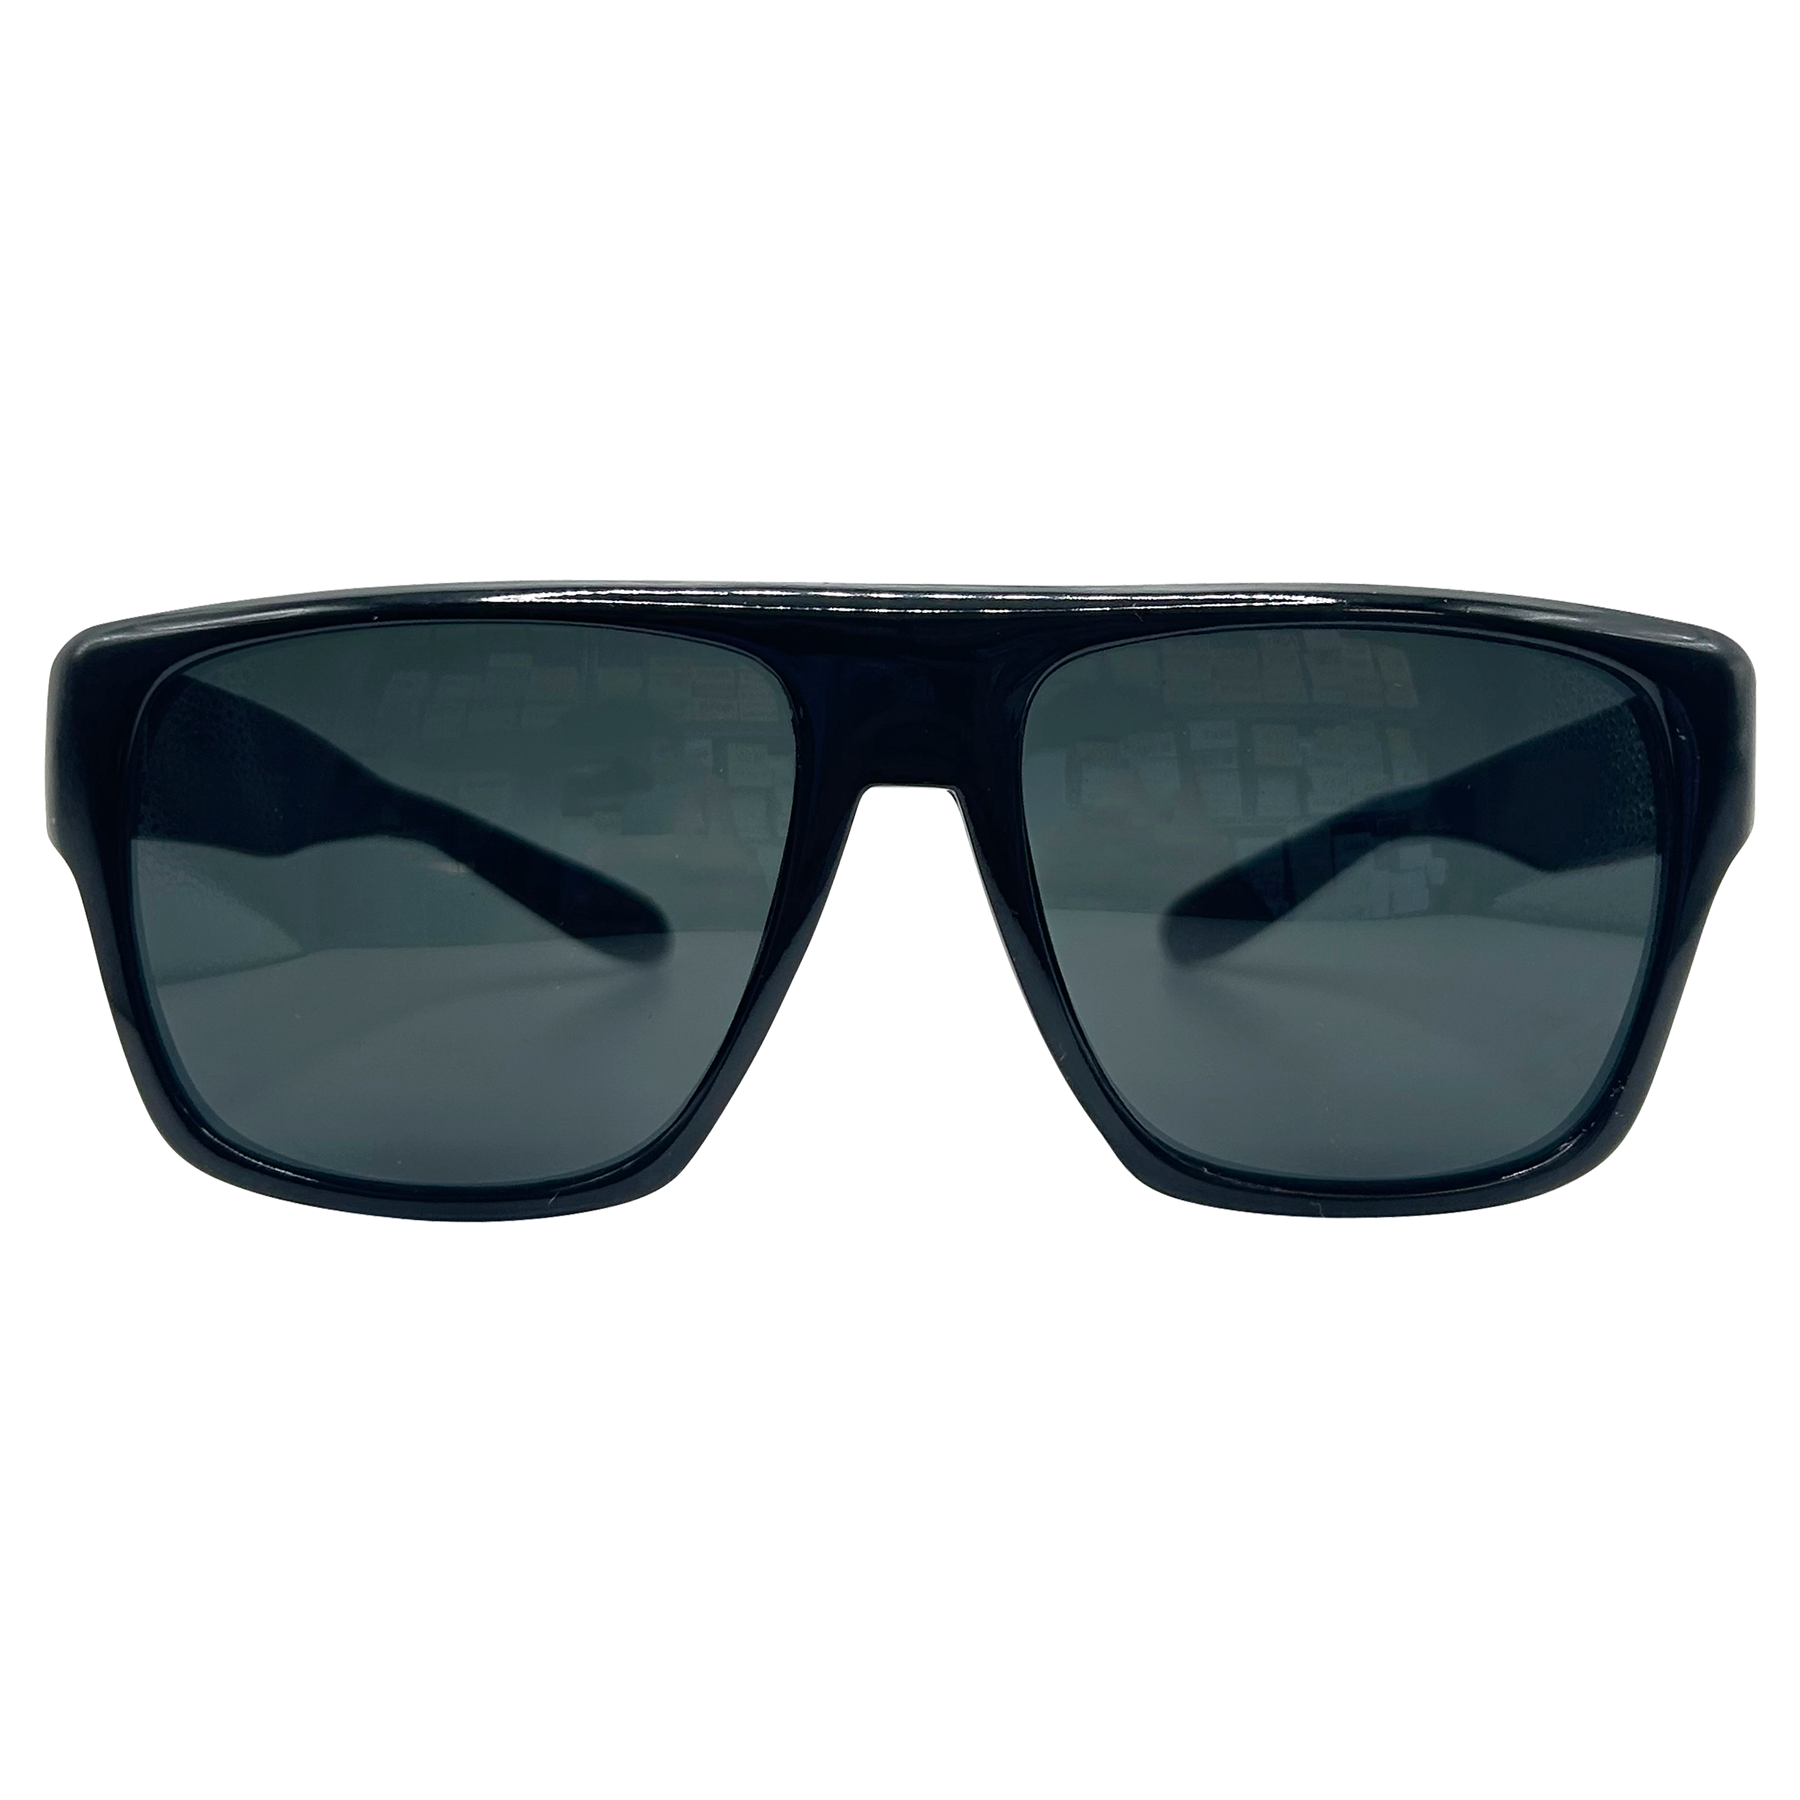 HIGHLAND PARK Black Square Sunglasses